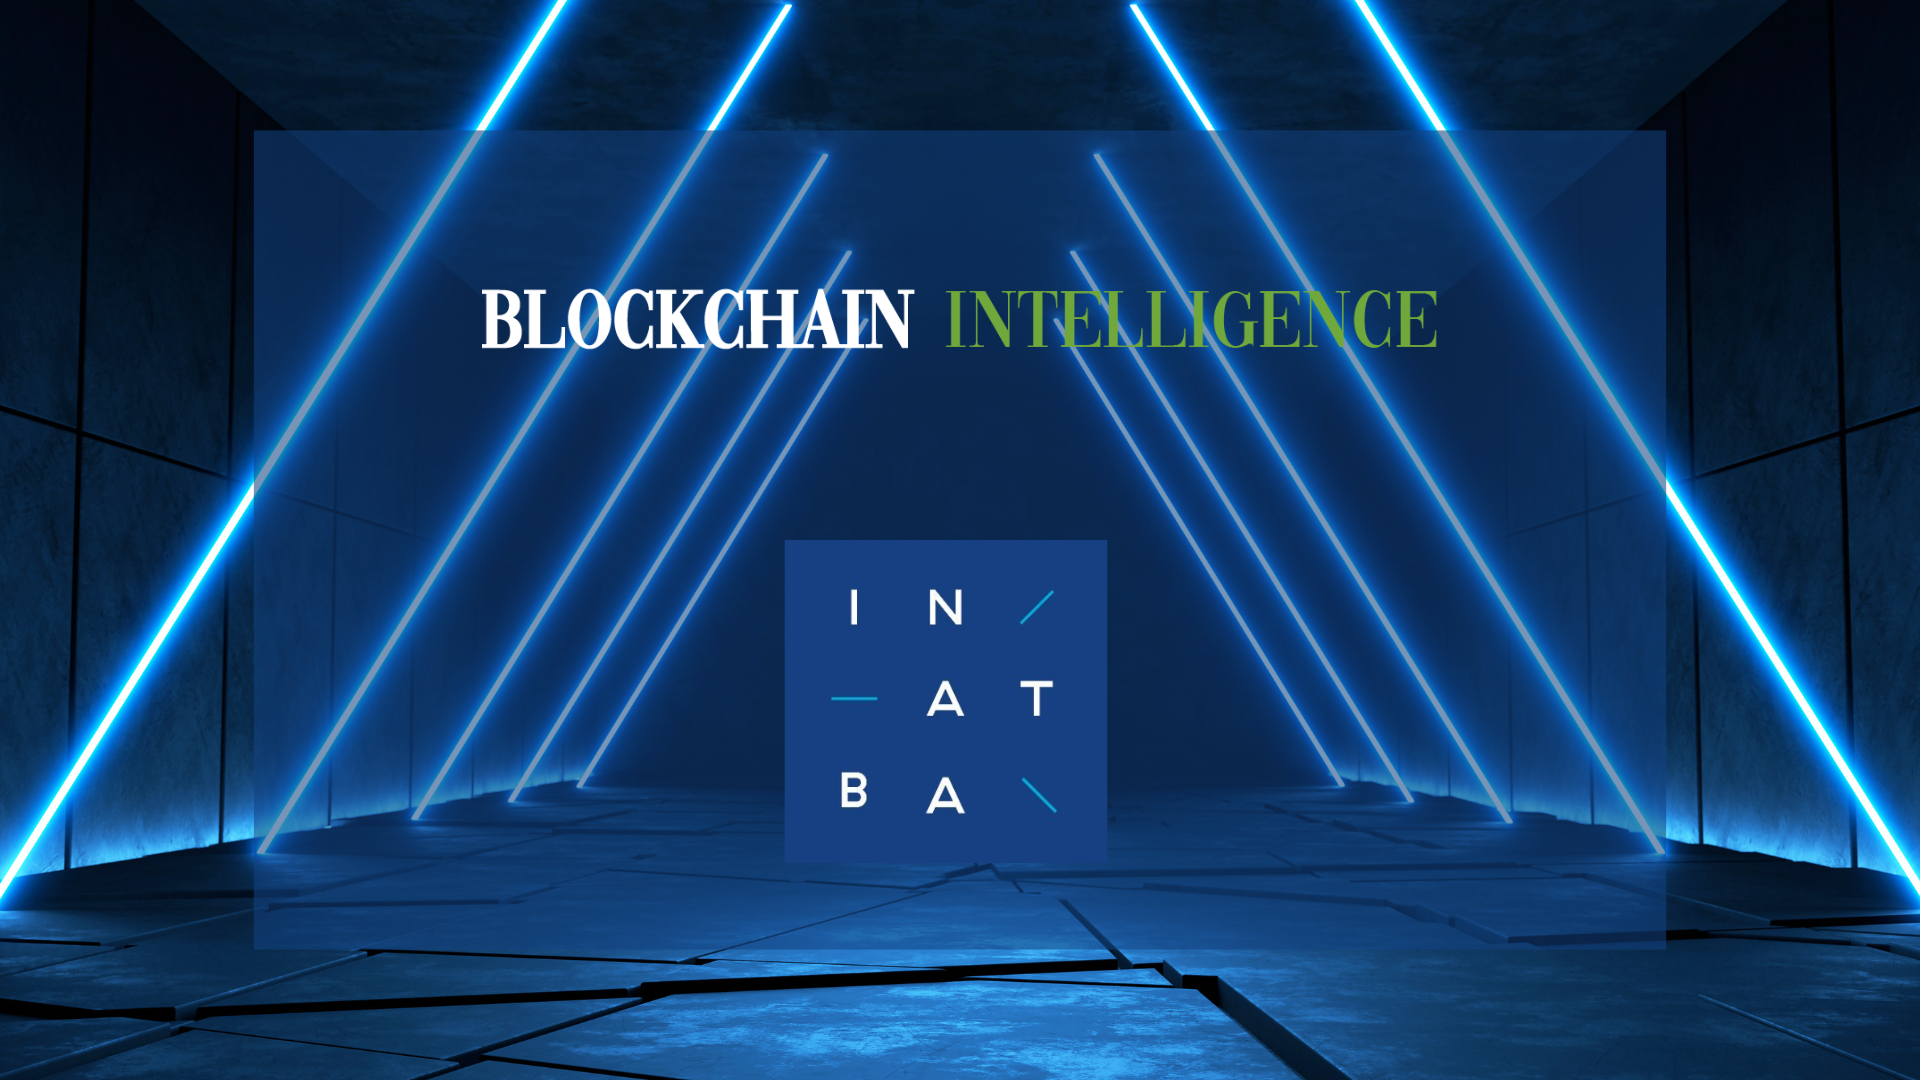 Blockchain Intelligence and INATBA